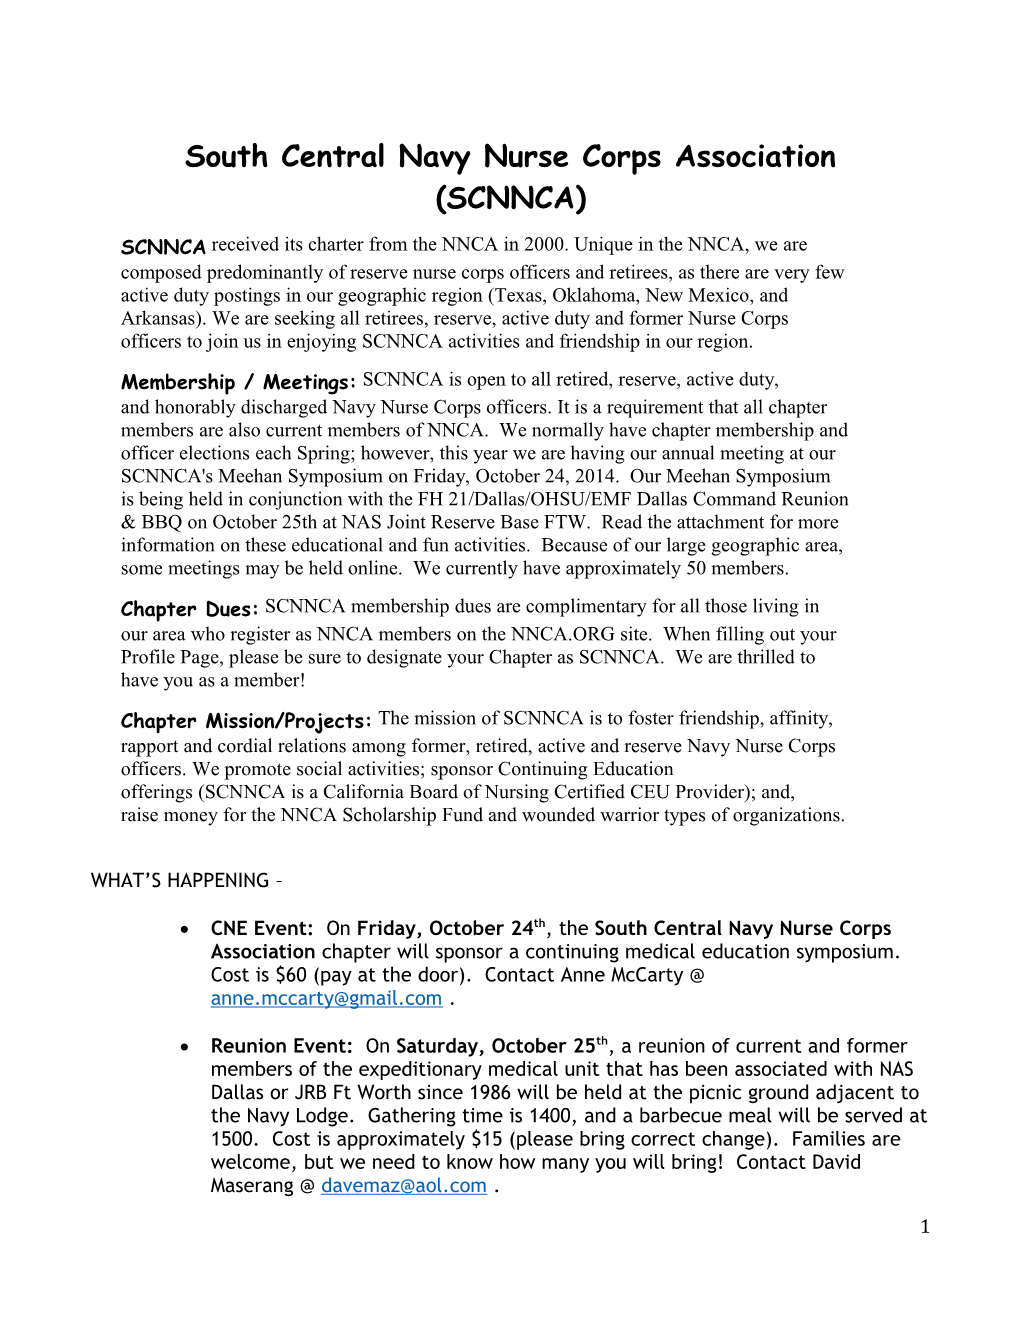 South Central Navy Nurse Corps Association (SCNNCA)